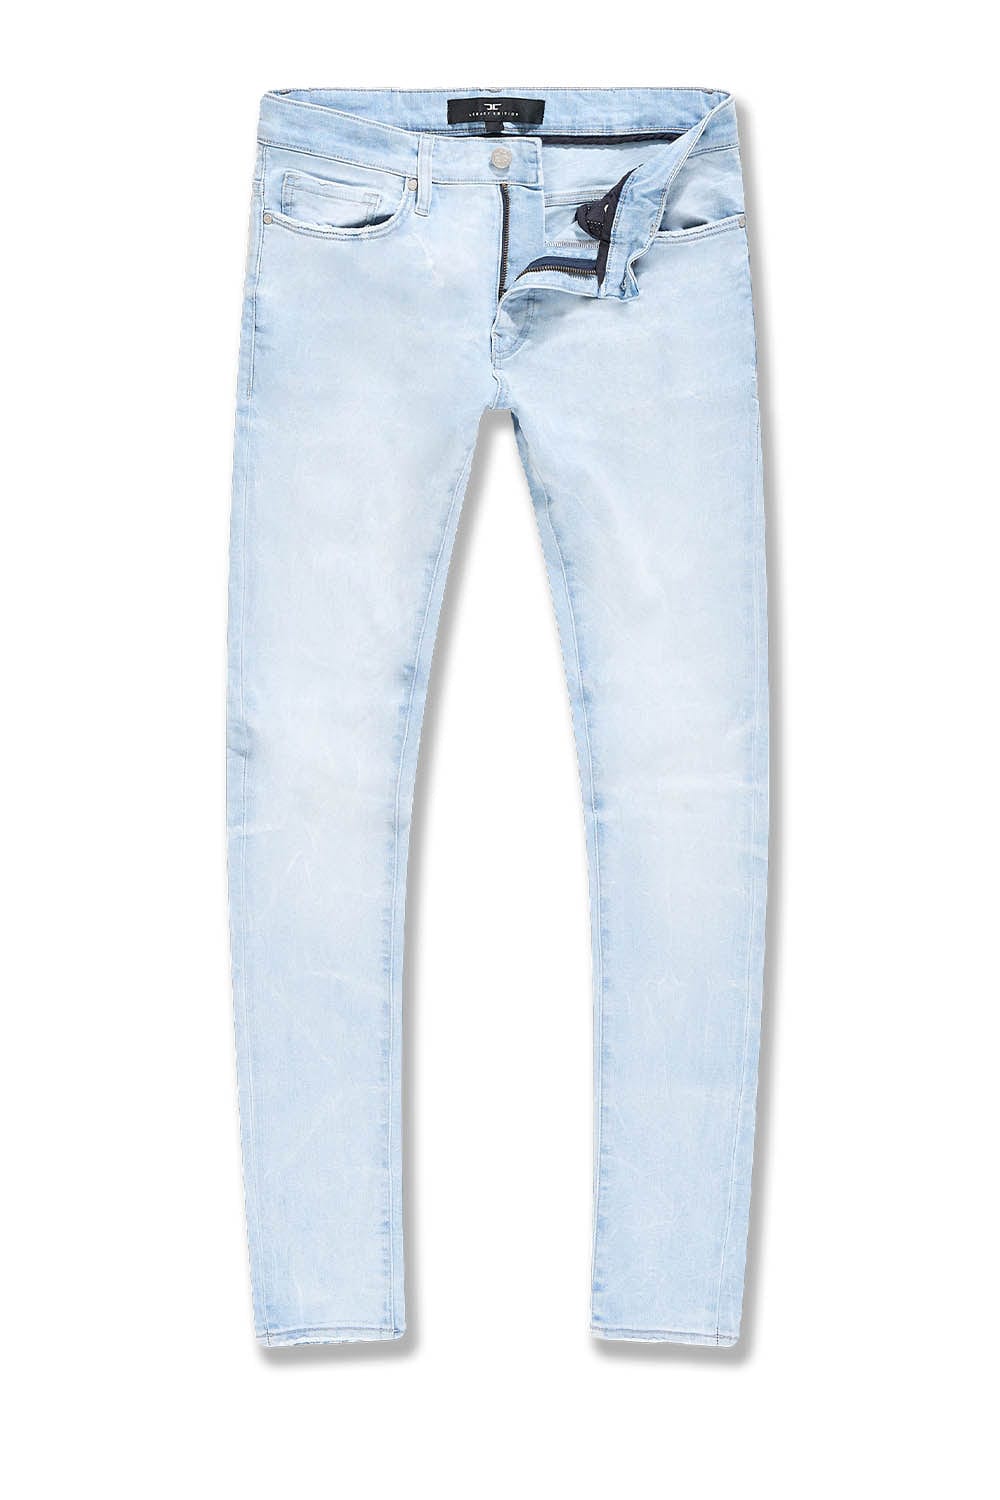 Jordan Craig Iced White Skinny Fit Jeans